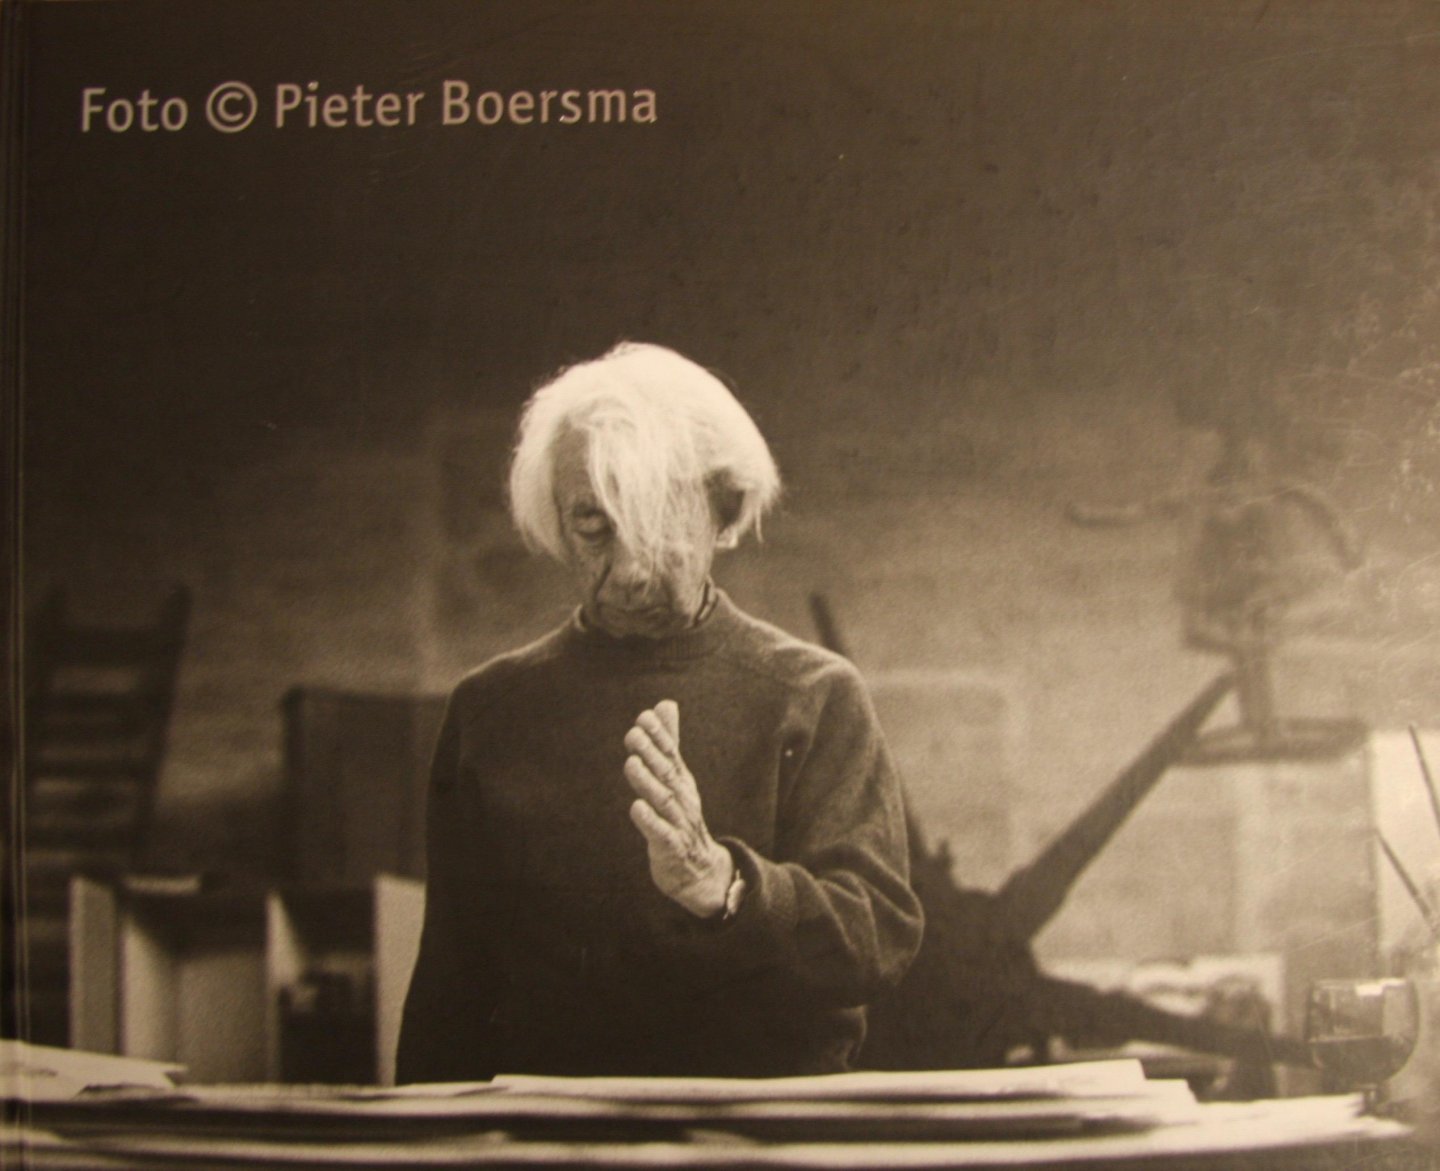 Boersma, P. (photos) - Foto © Pieter Boersma